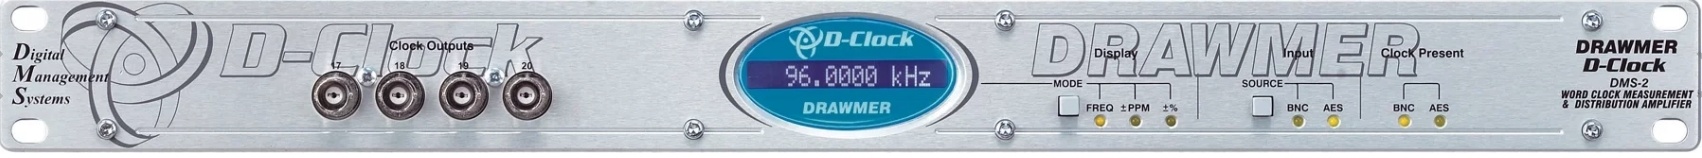 Drawmer DMS-2 D-Clock Master Clock Distributor